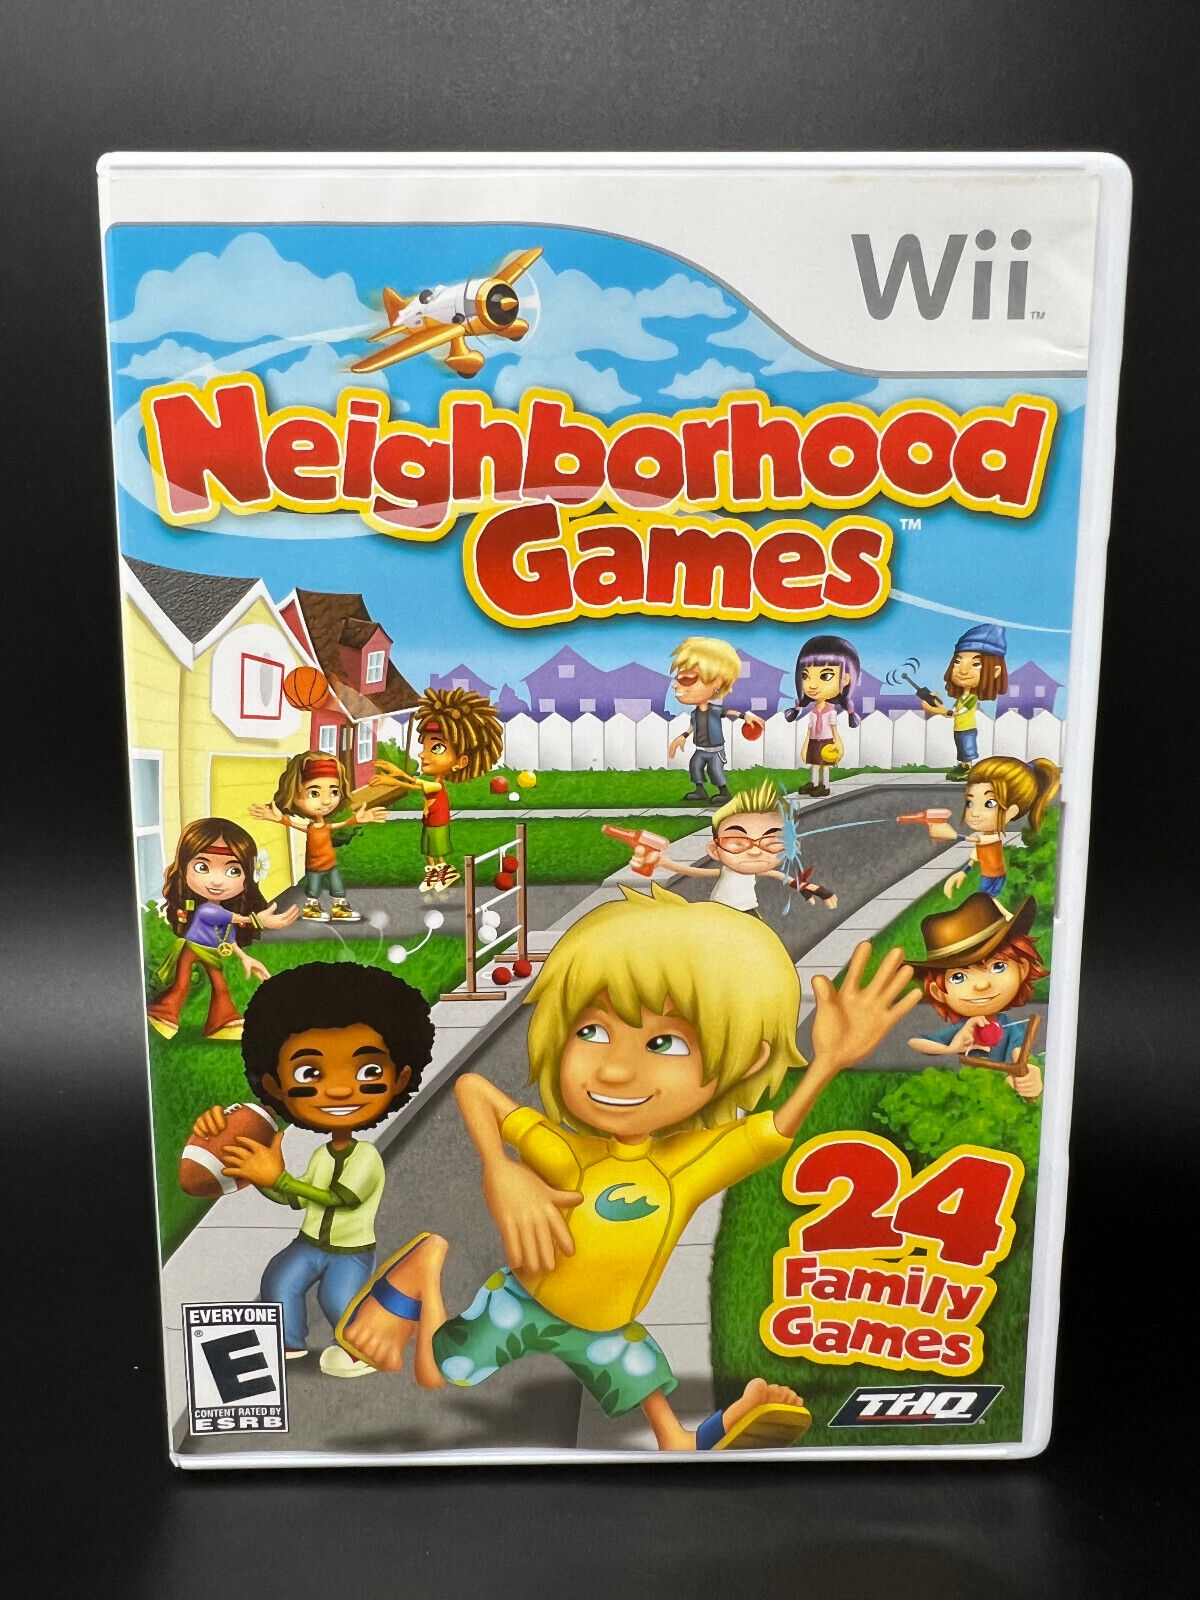 Neighborhood Games (Nintendo Wii) *GAME & CASE - NO MANUAL - TESTED*